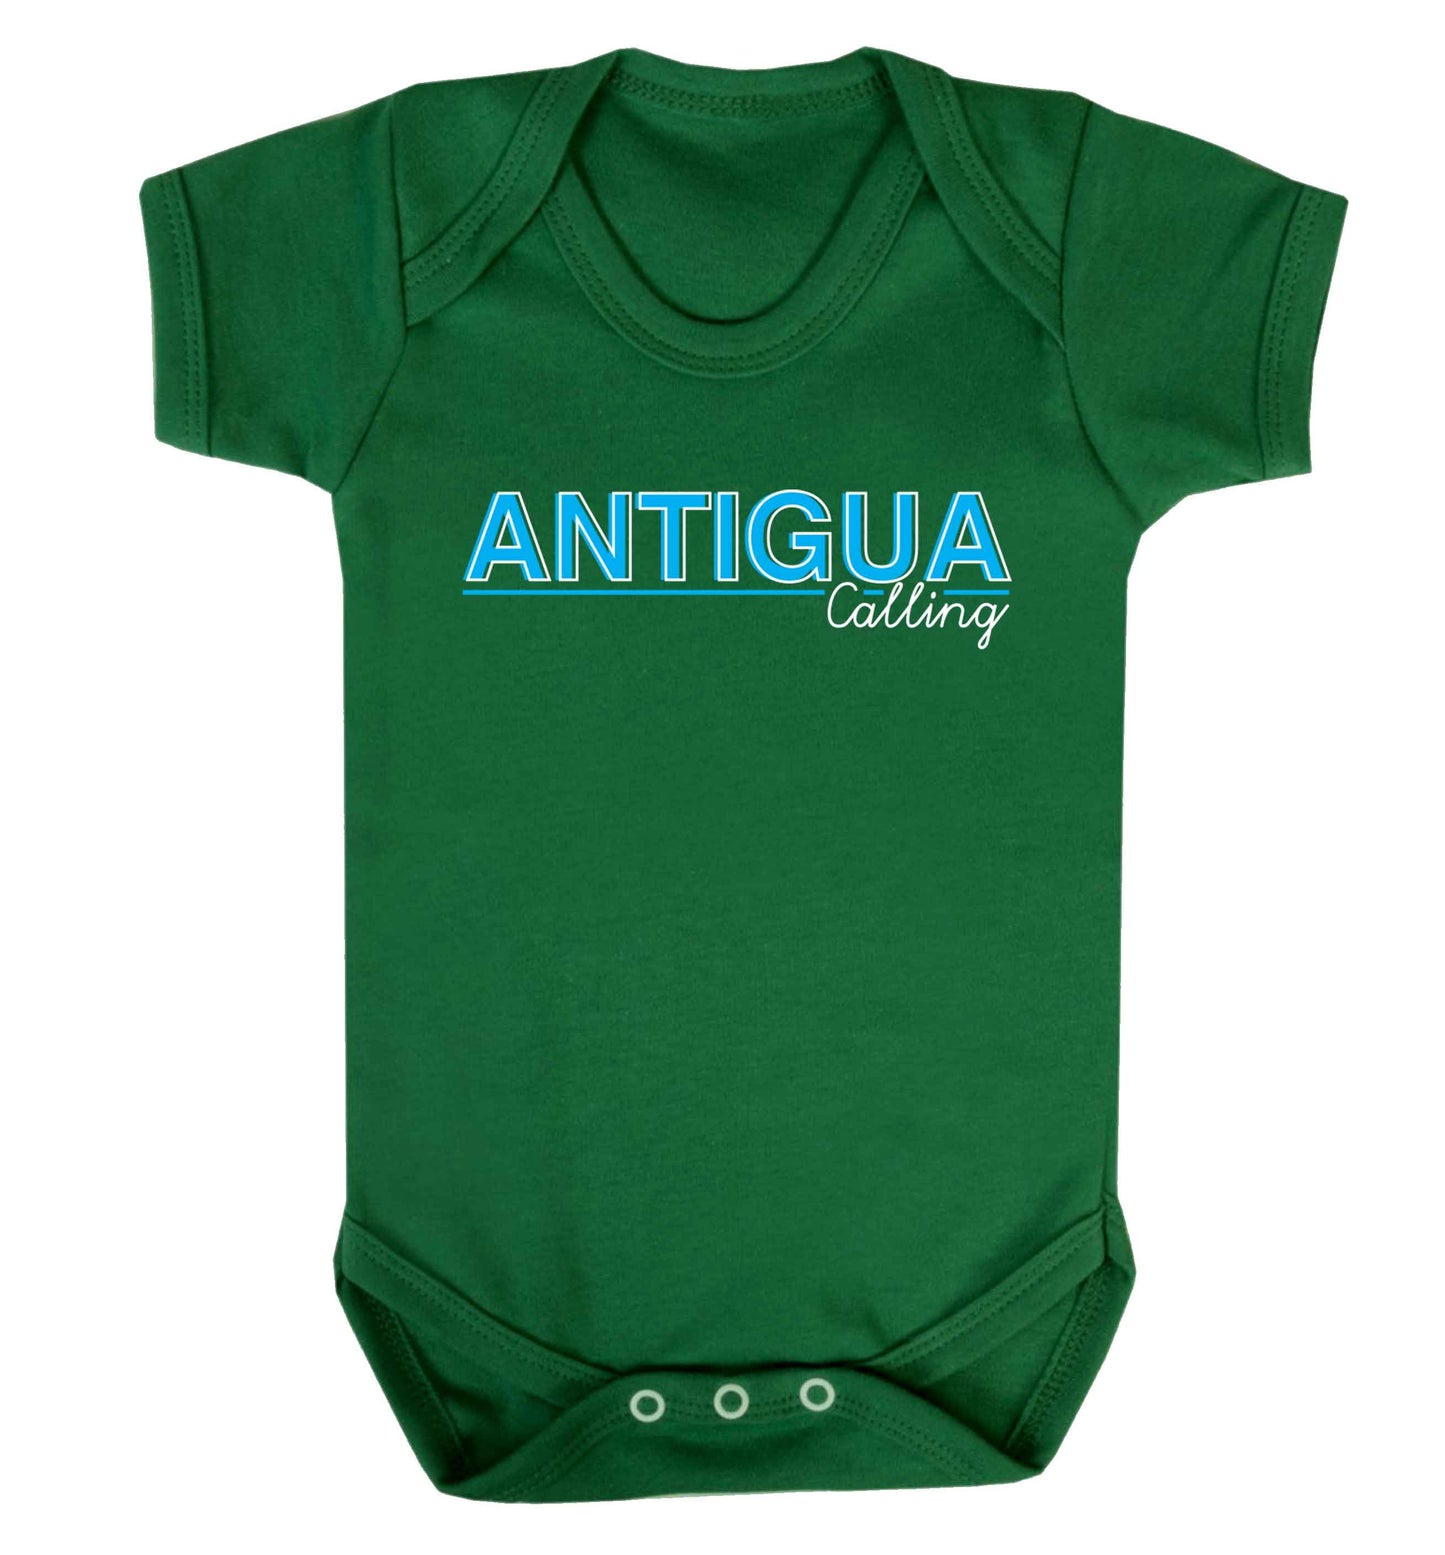 Antigua calling Baby Vest green 18-24 months